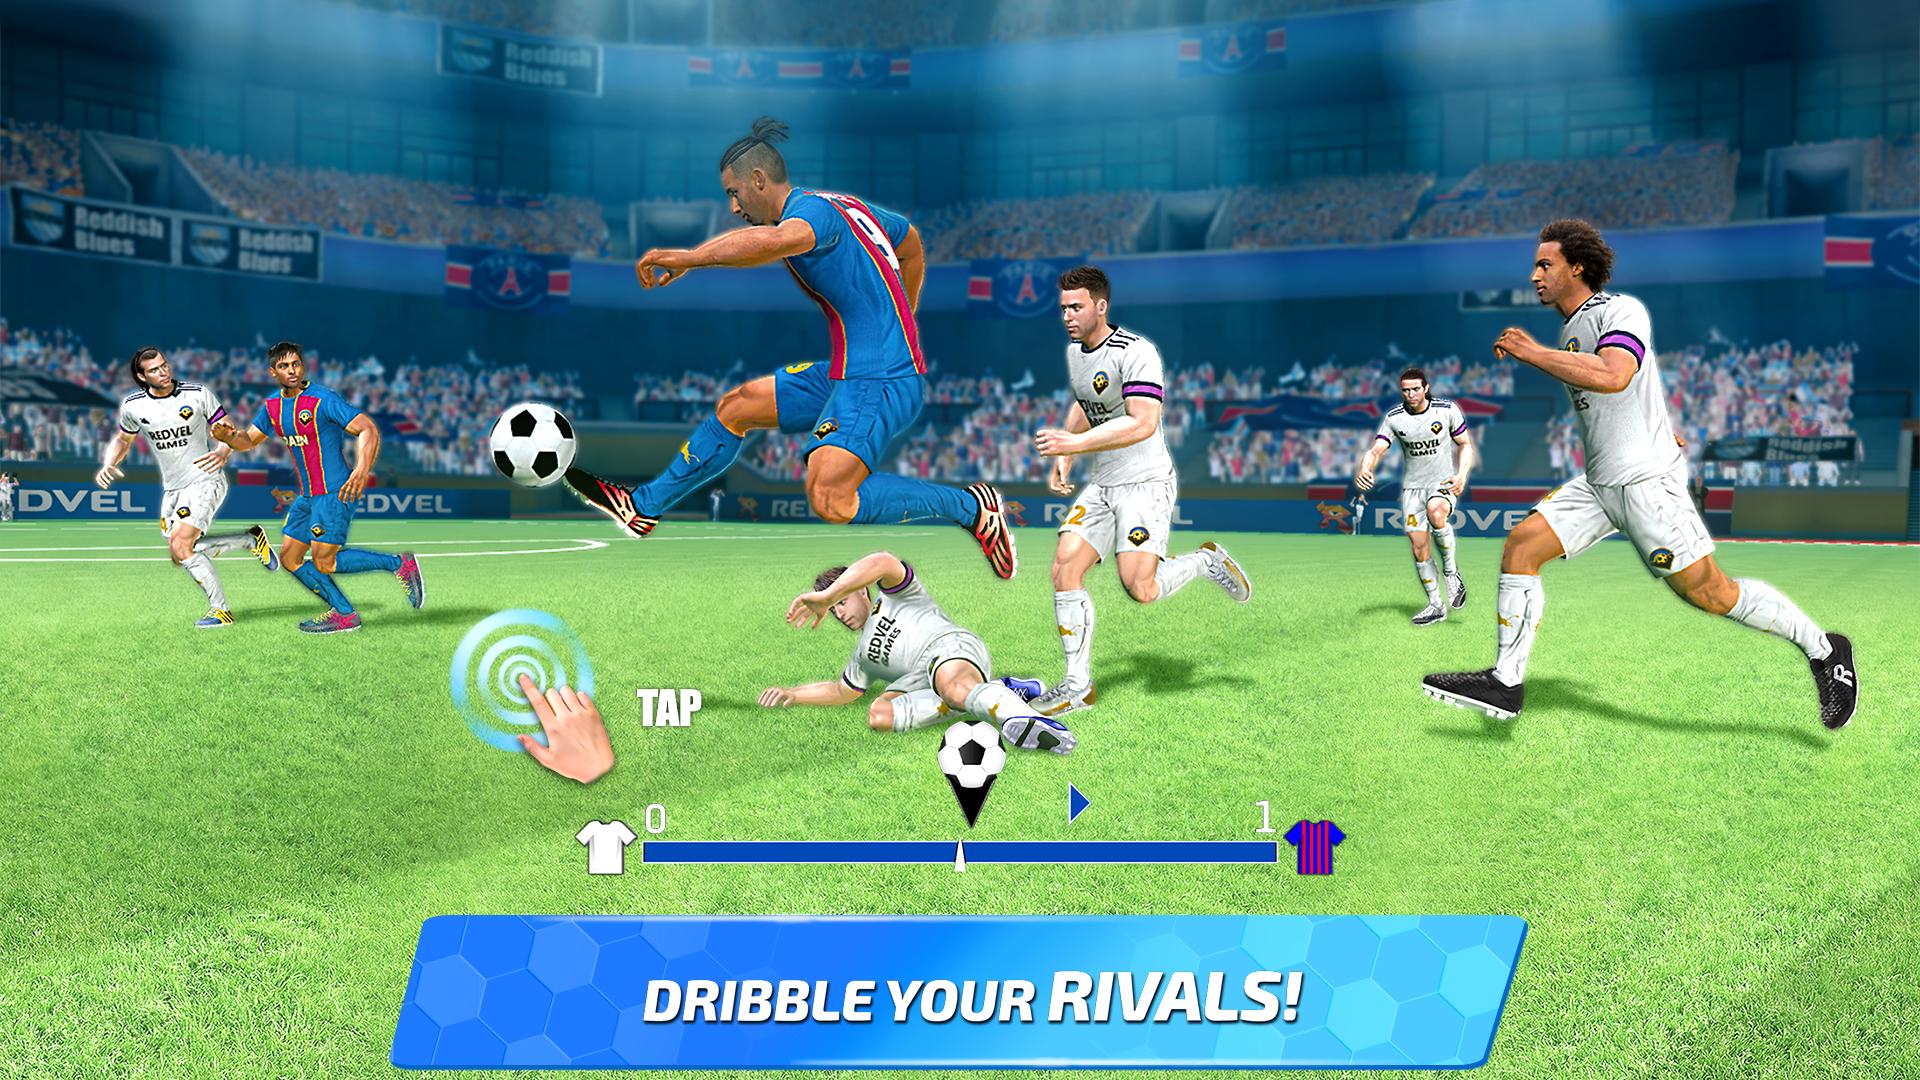 Soccer Star 2020 Football Cards: The soccer game 0.19.0 Screenshot 14